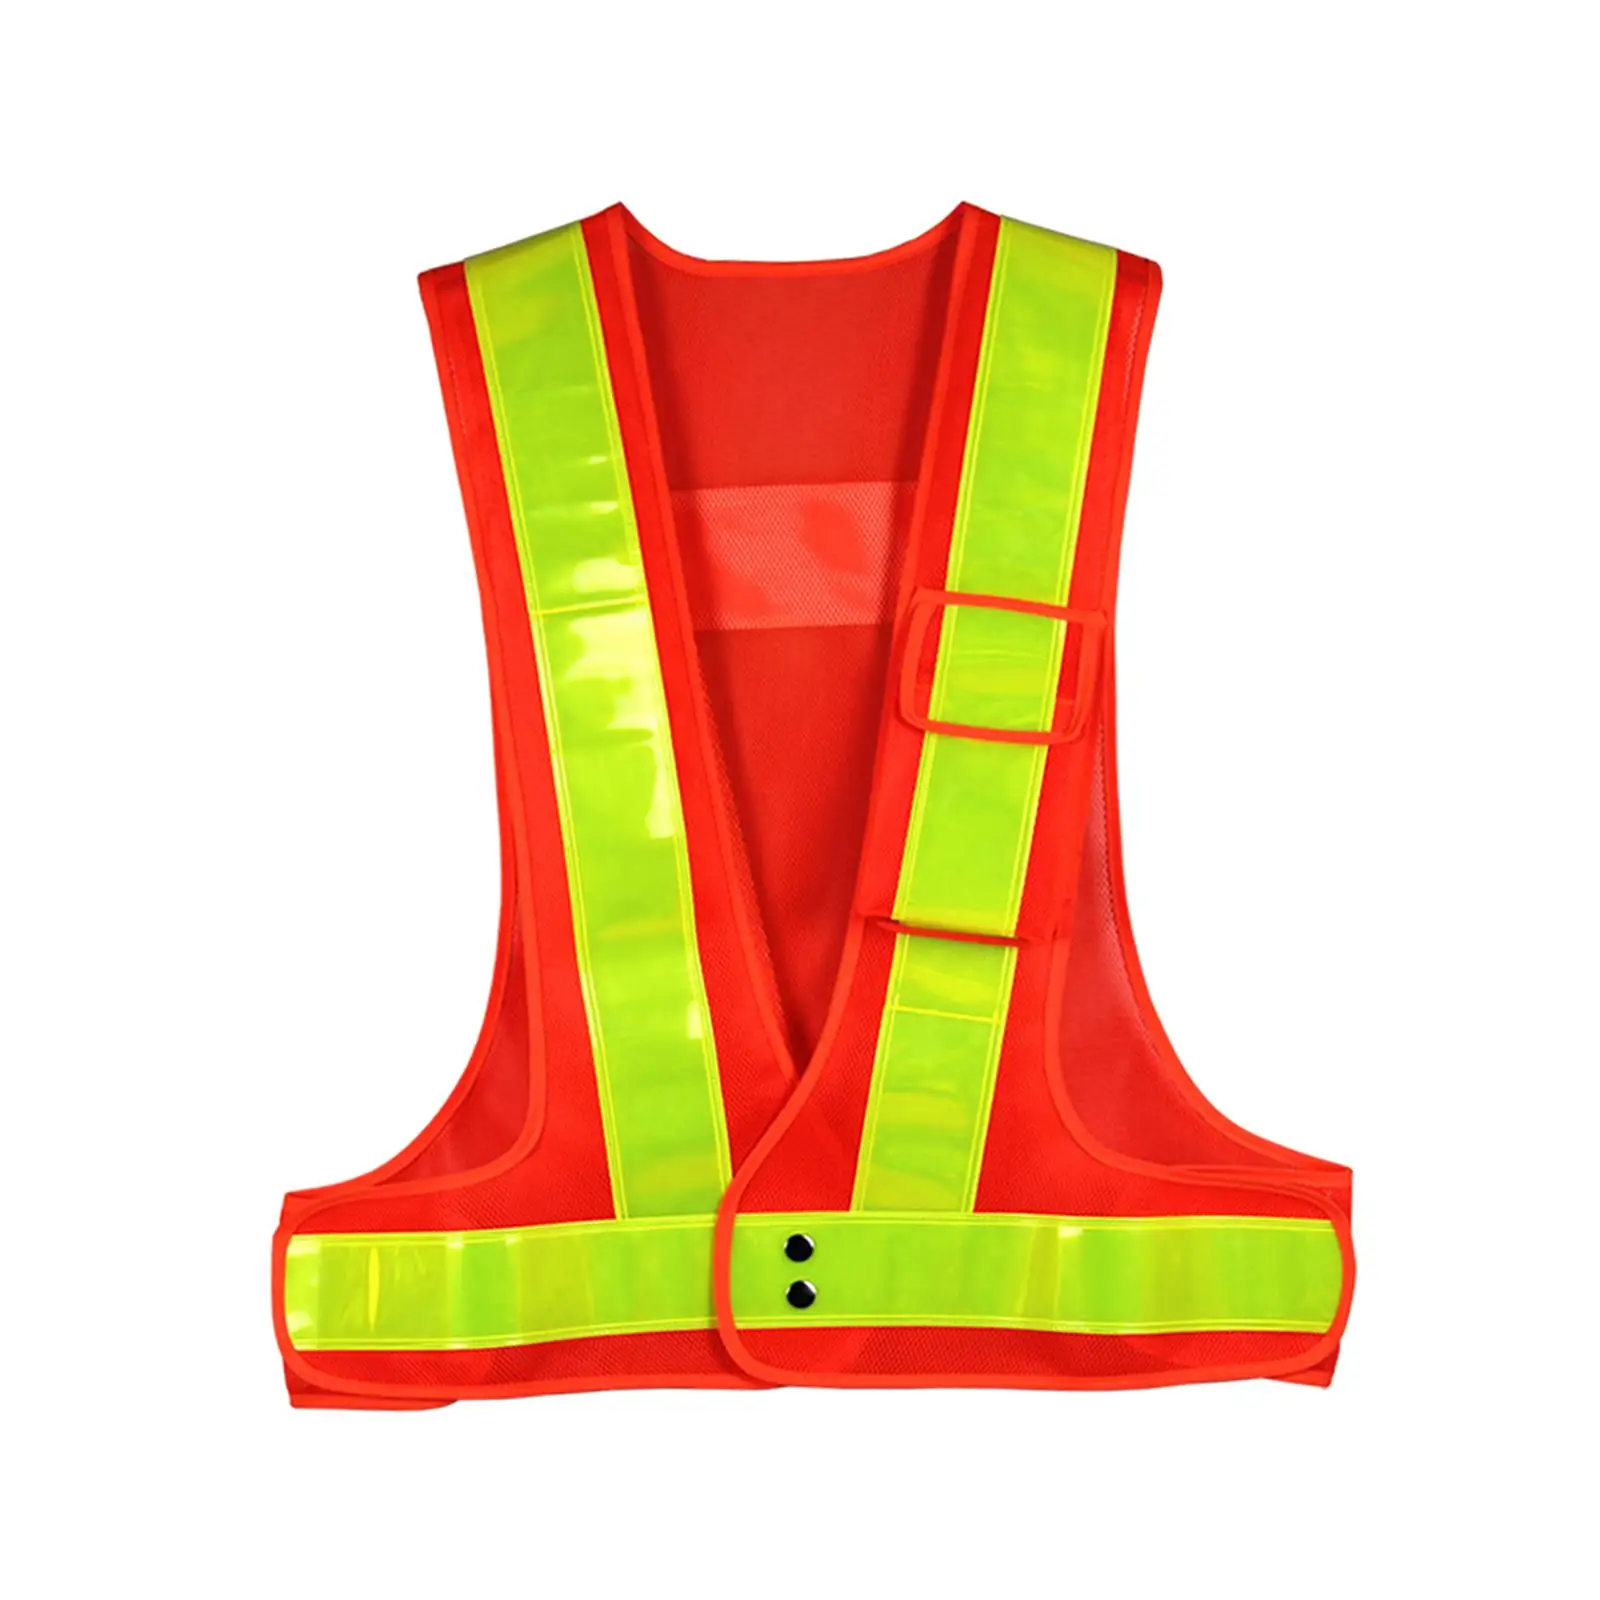 High Visibility Reflective Safety Vest Running Reflective Vest Gear for Volunteer Emergency Traffic Work Walking Night Running